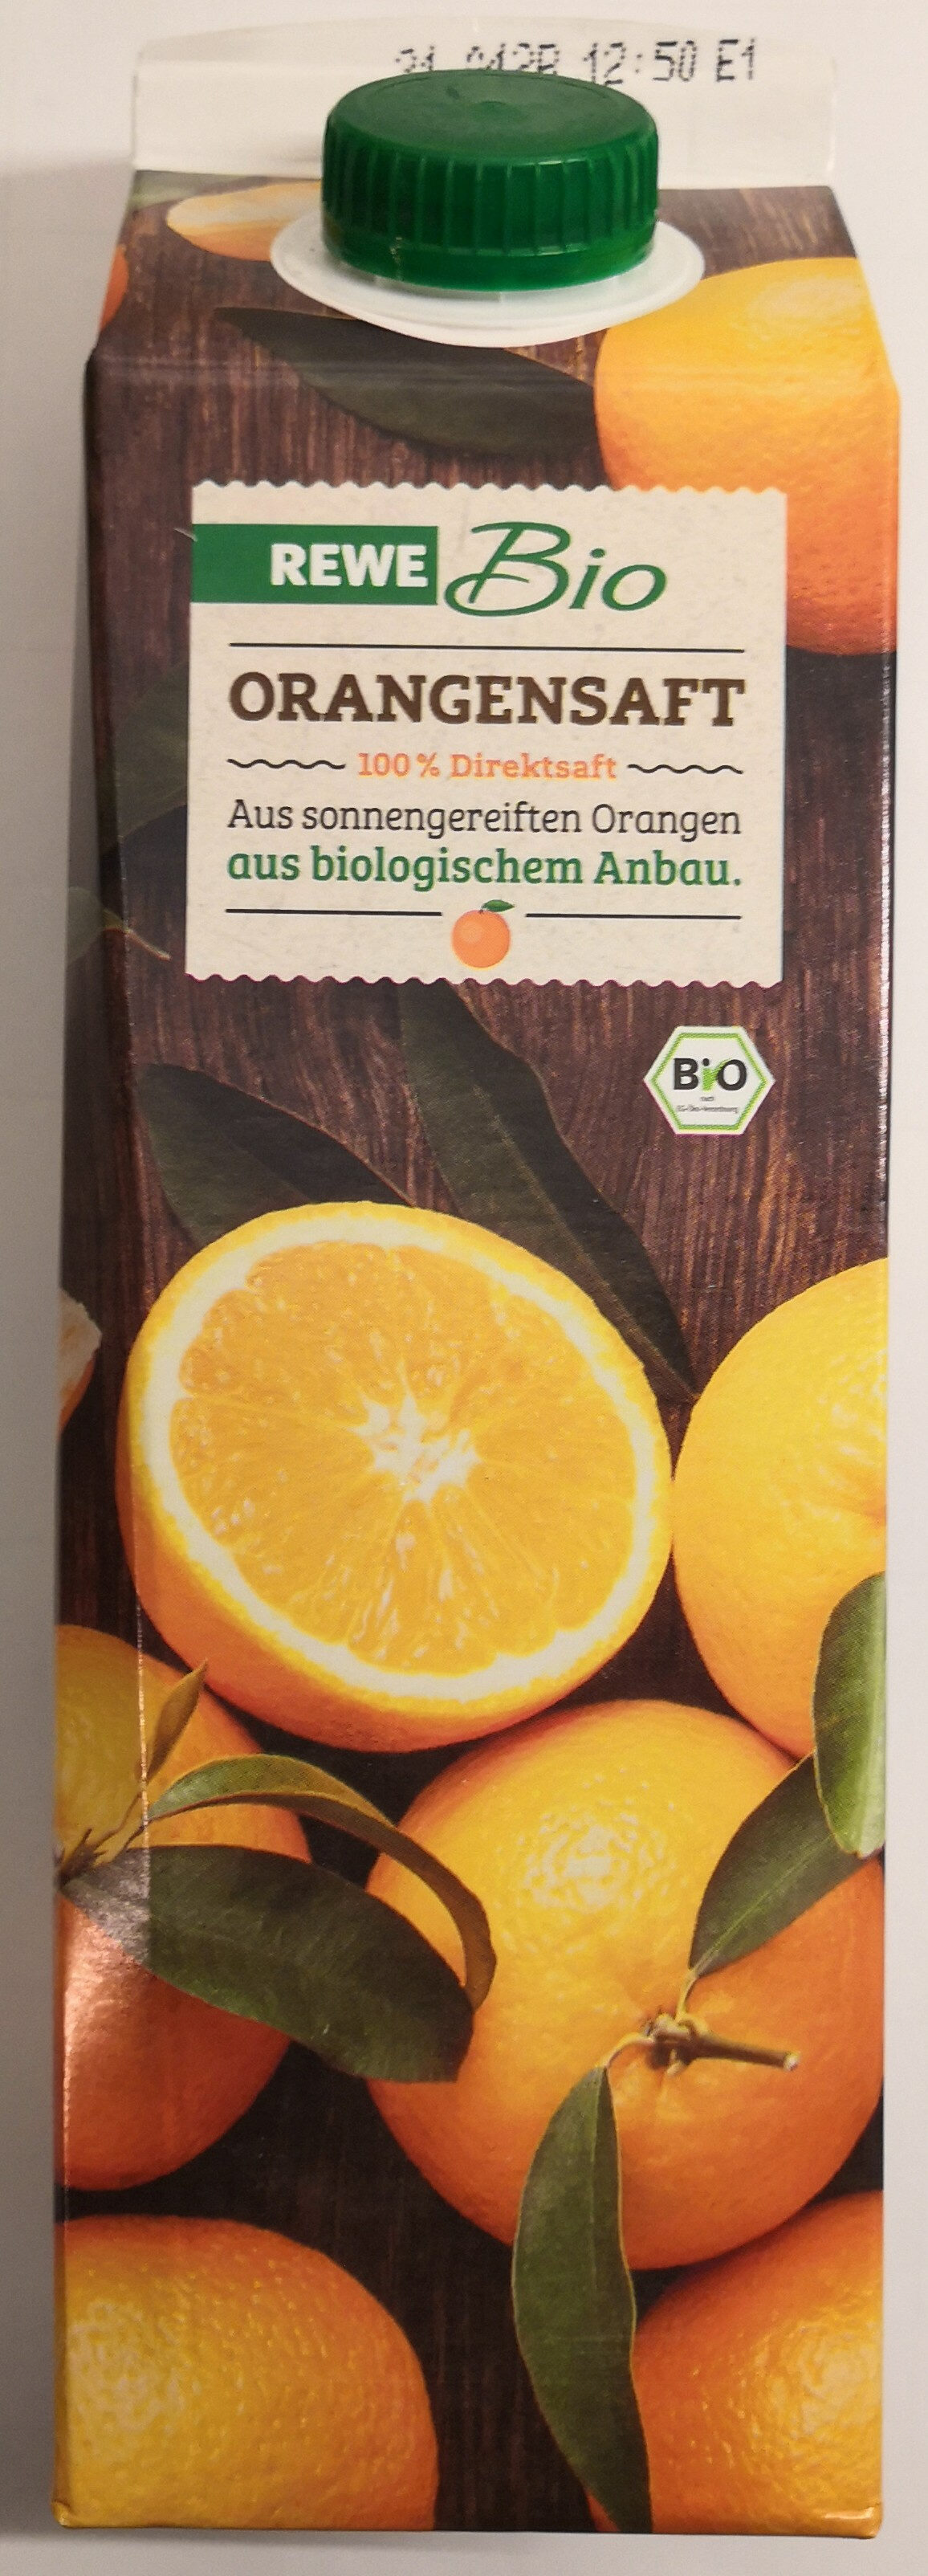 Rewe Bio Orangensaft, 100% Direktsaft - Produkt